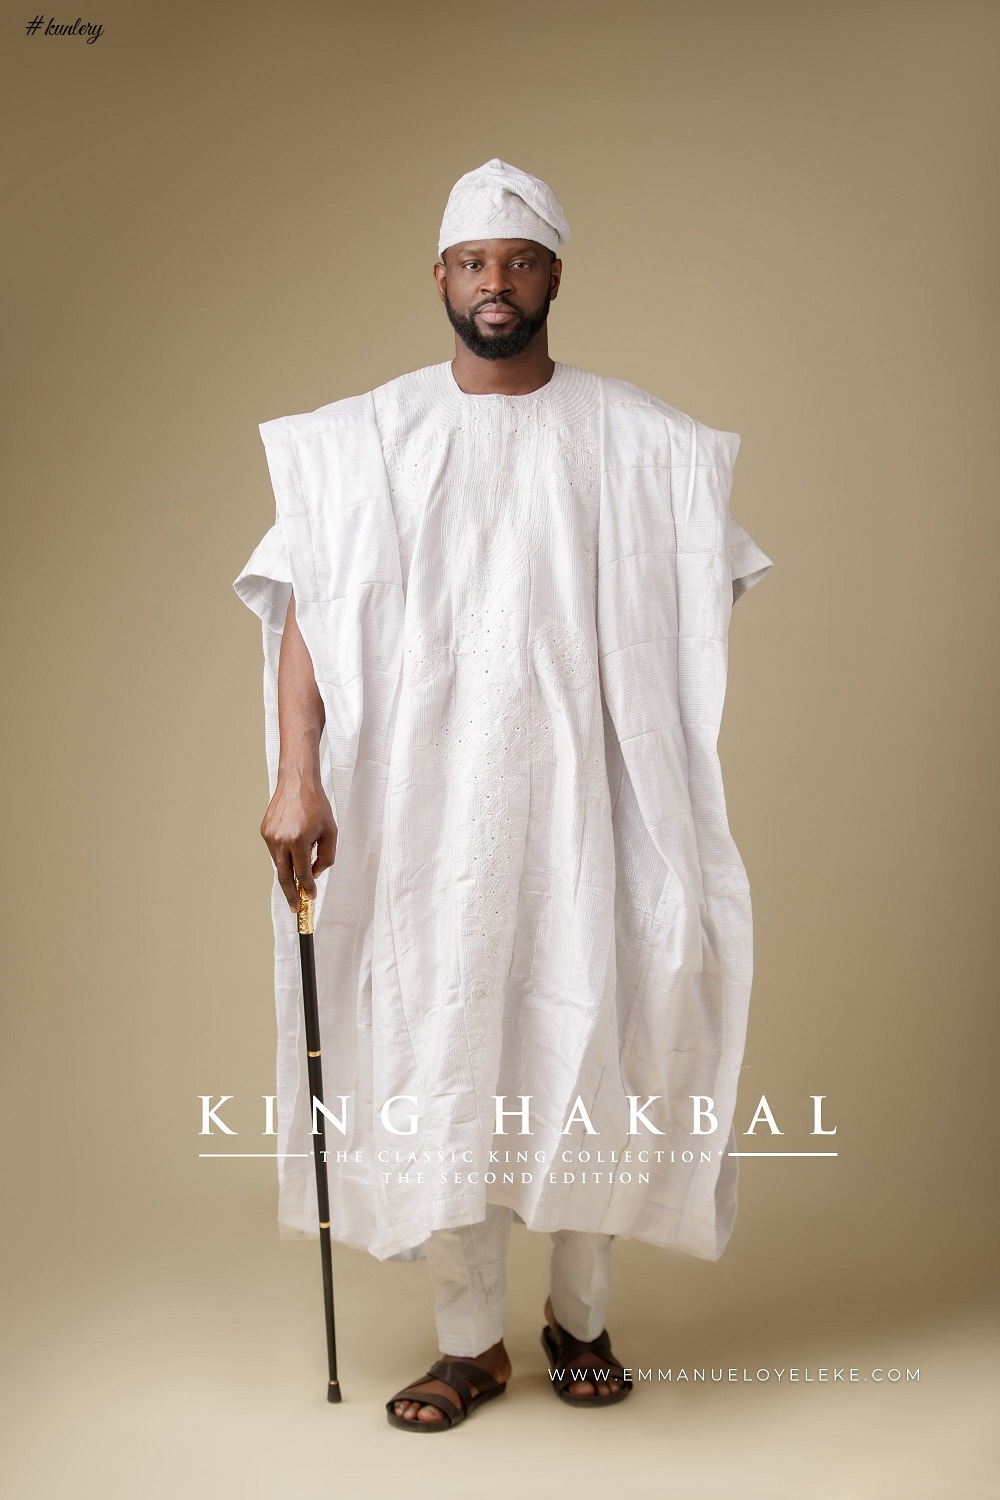 King Hakbal Releases ‘Classic King’ Lookbook Featuring Ninolowo Bolanle